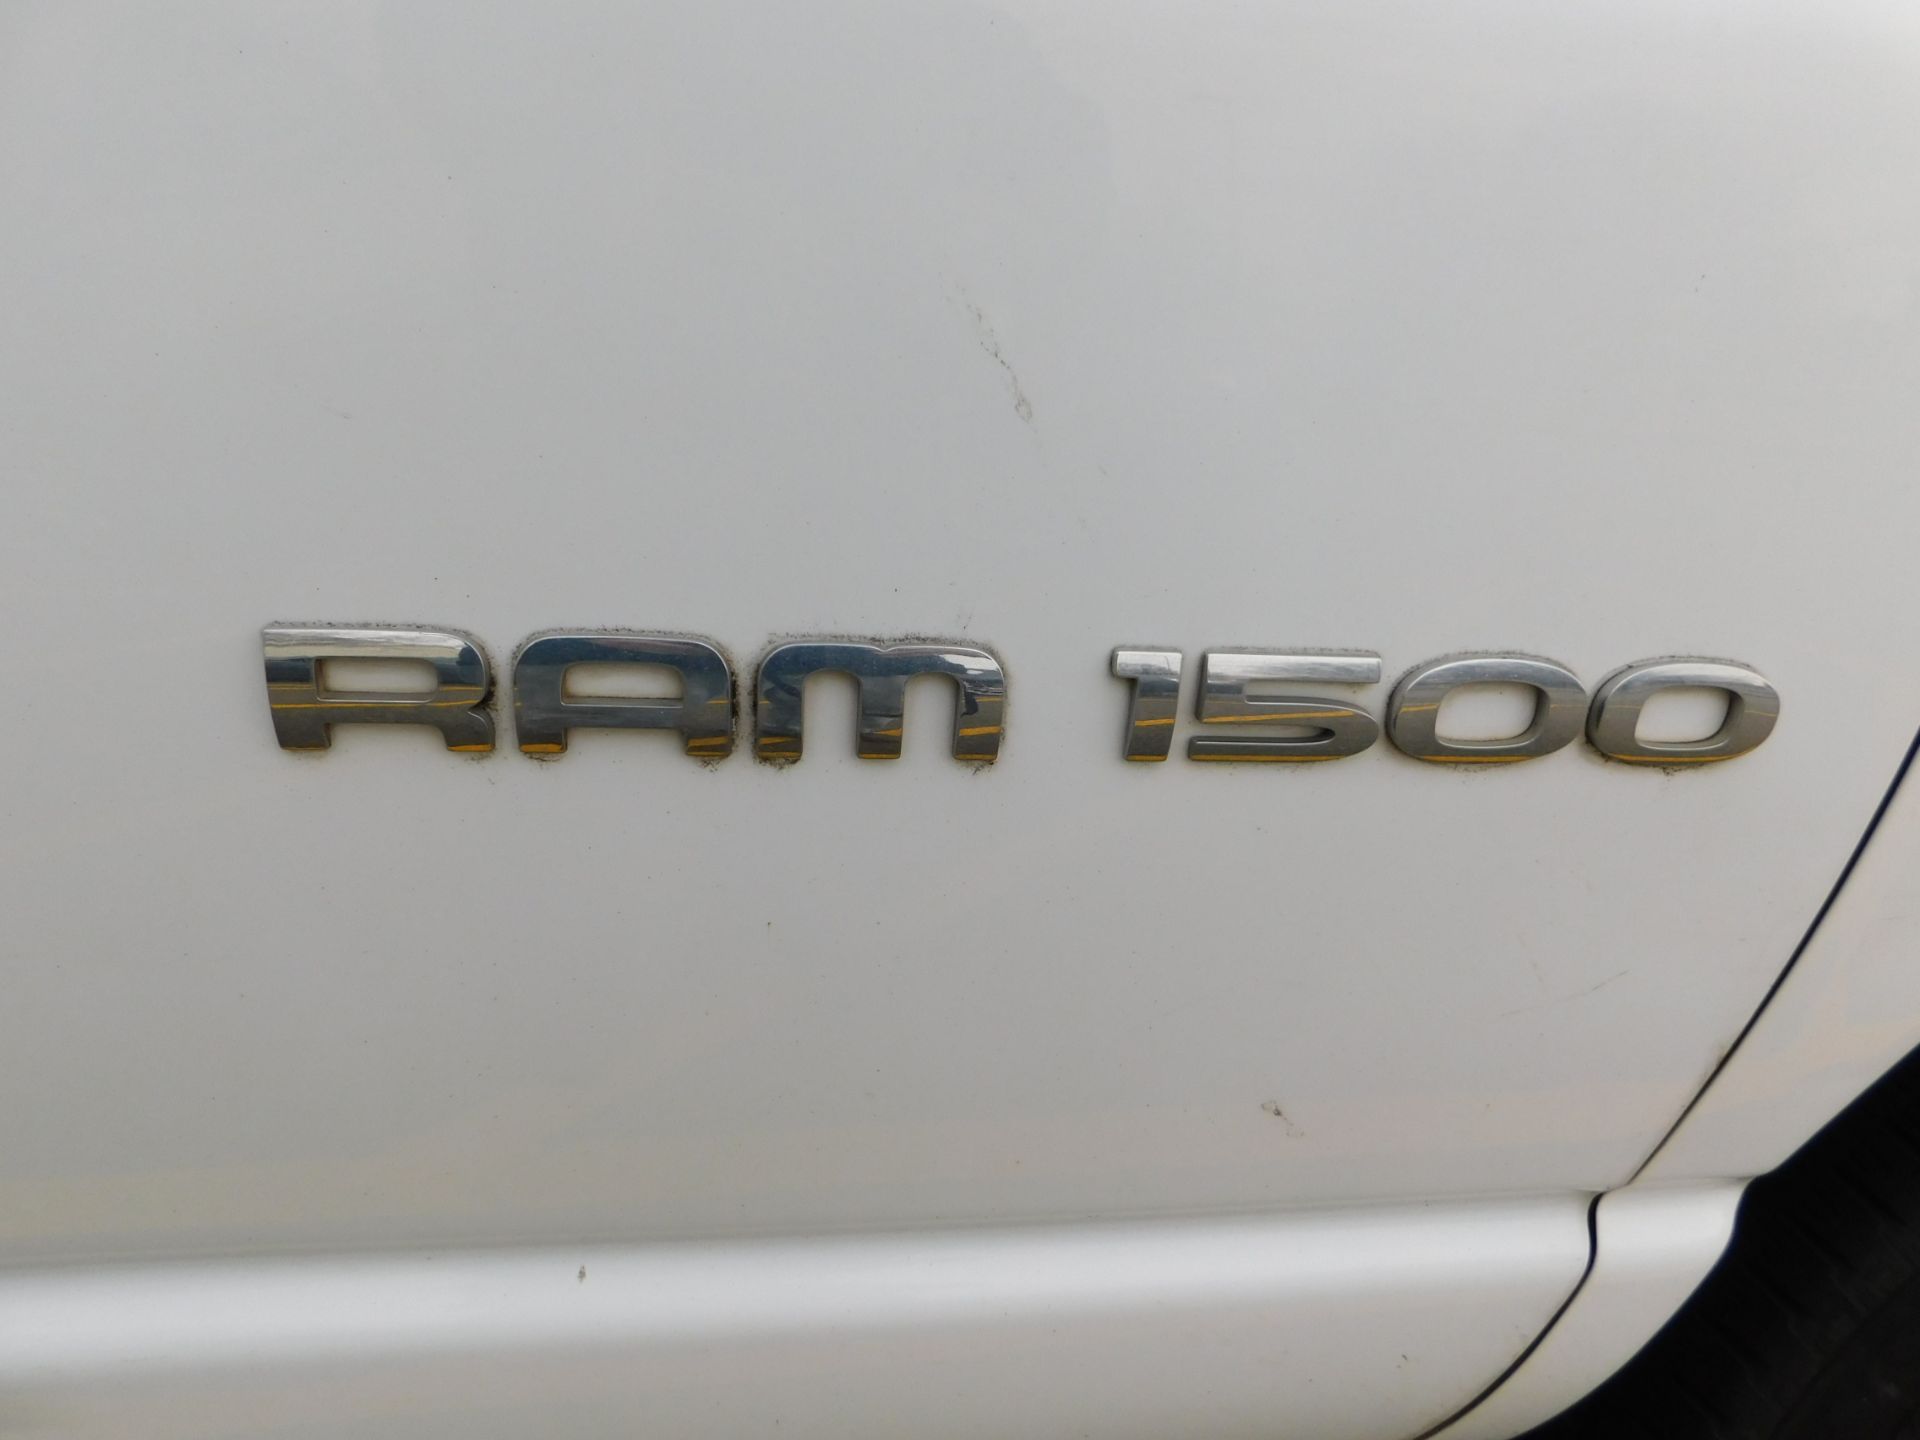 2005 Dodge Ram 1500 Pickup Truck, VIN 1D7HA18DX5S281951, Automatic, AM/FM/CD, Crew Cab, 5.7 L Hemi - Image 31 of 31